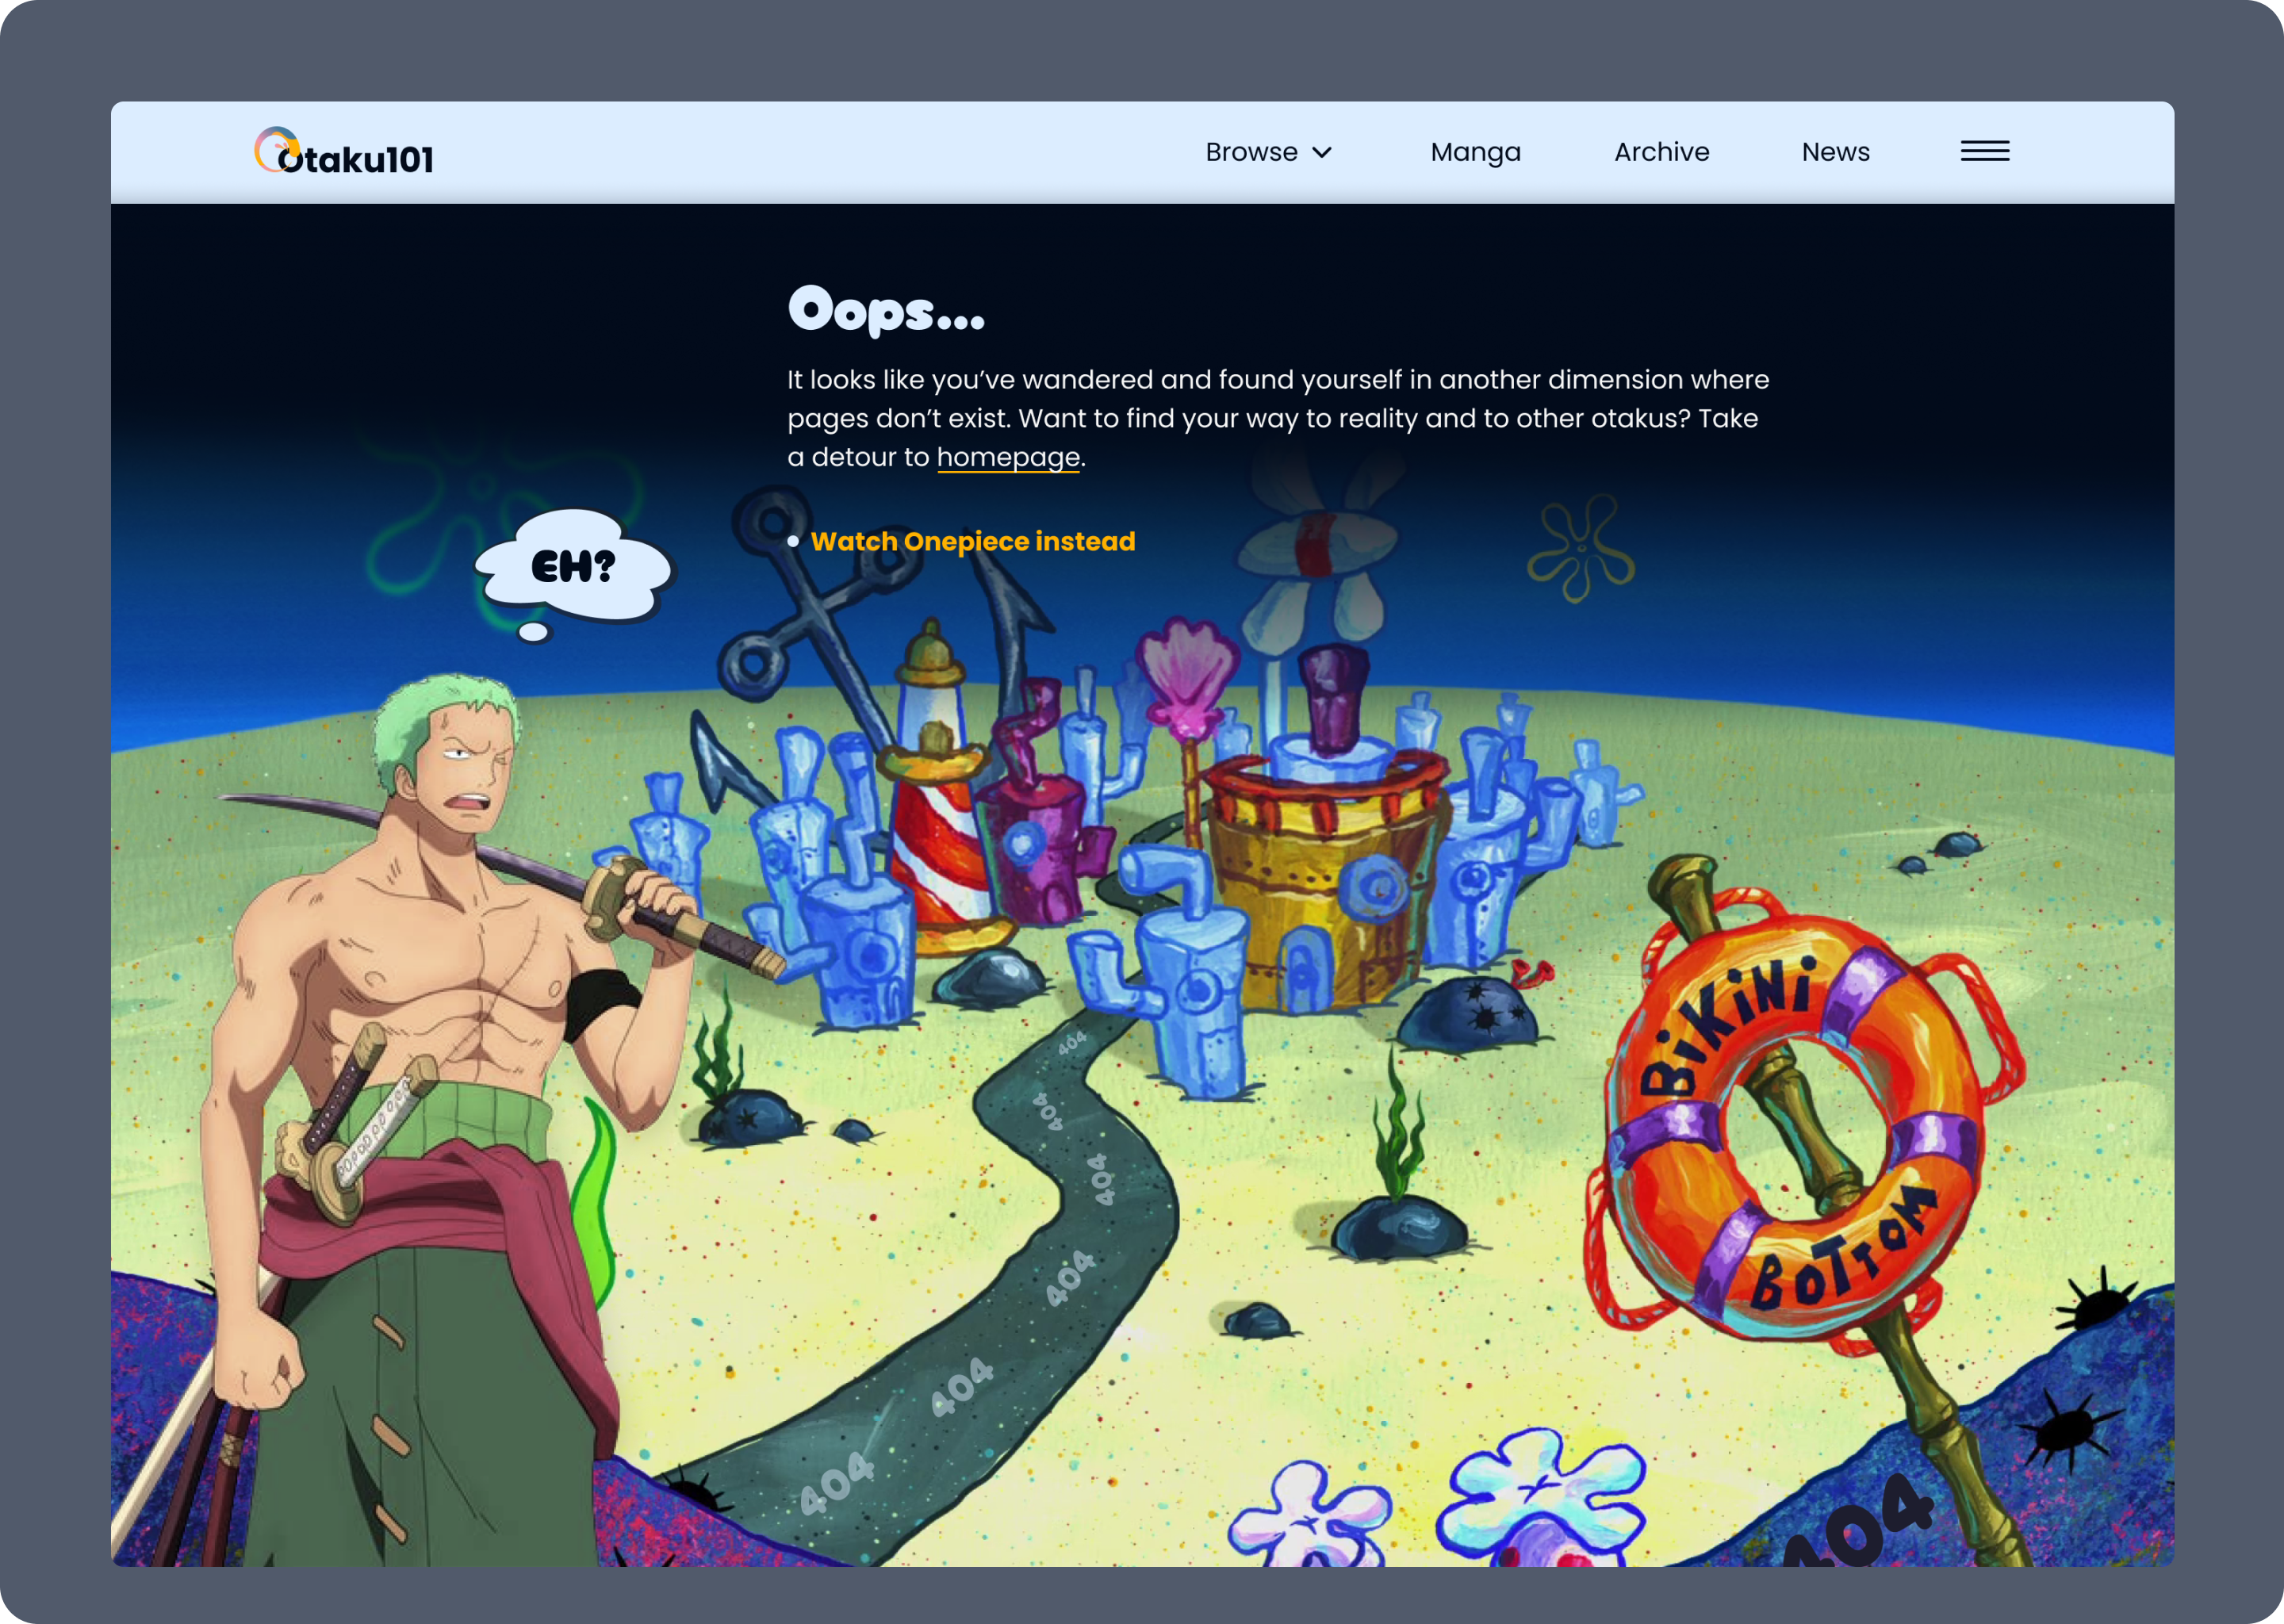 404 Error Page - Anime website by Dolapo Adedoyin on Dribbble